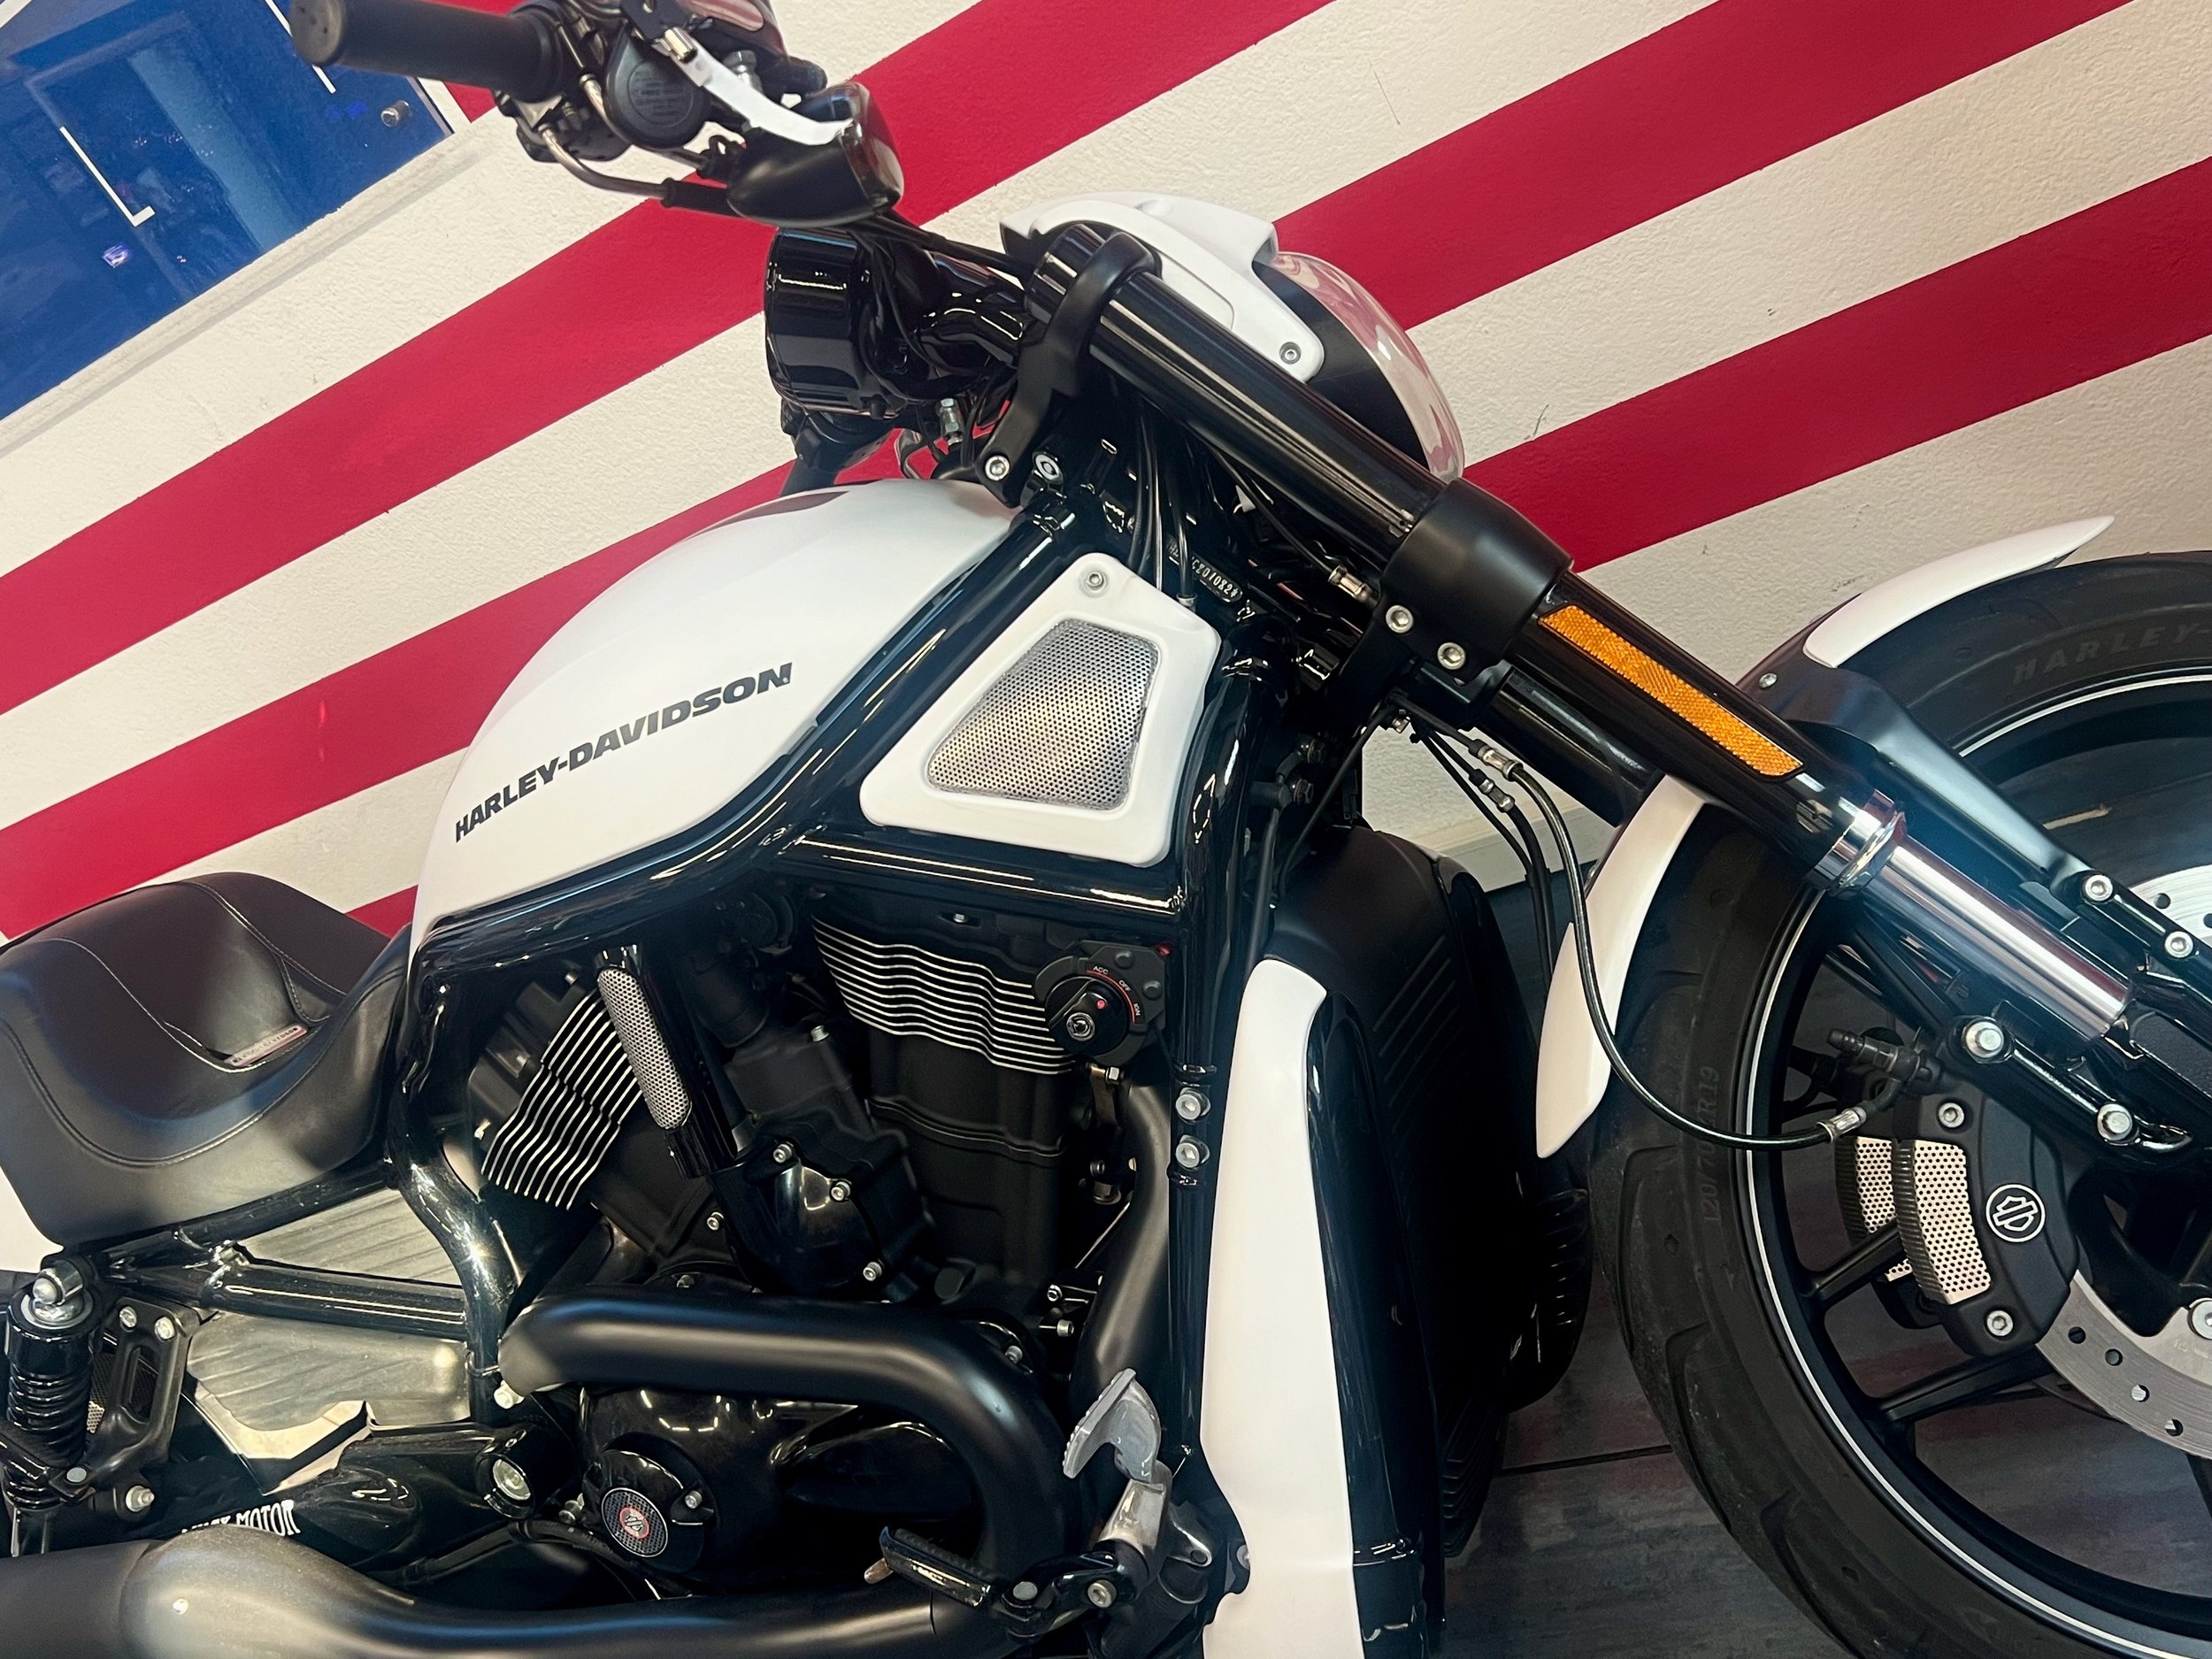 04 2016 Harley Davidson V-Rod Muscle Salt Lake Matt White.jpeg